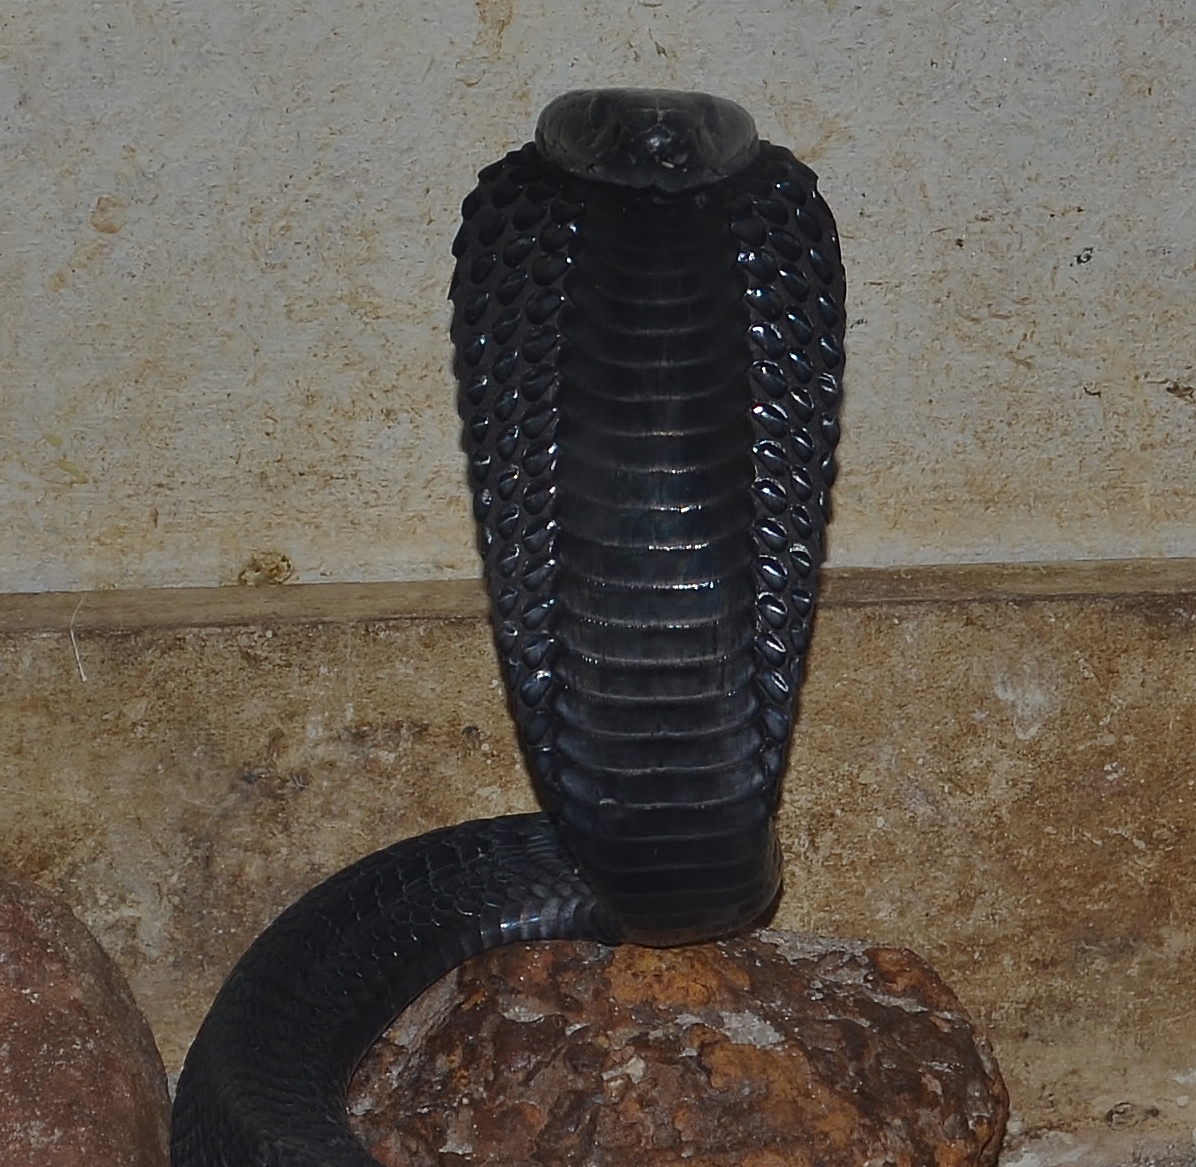 Black-Necked Spitting Cobra